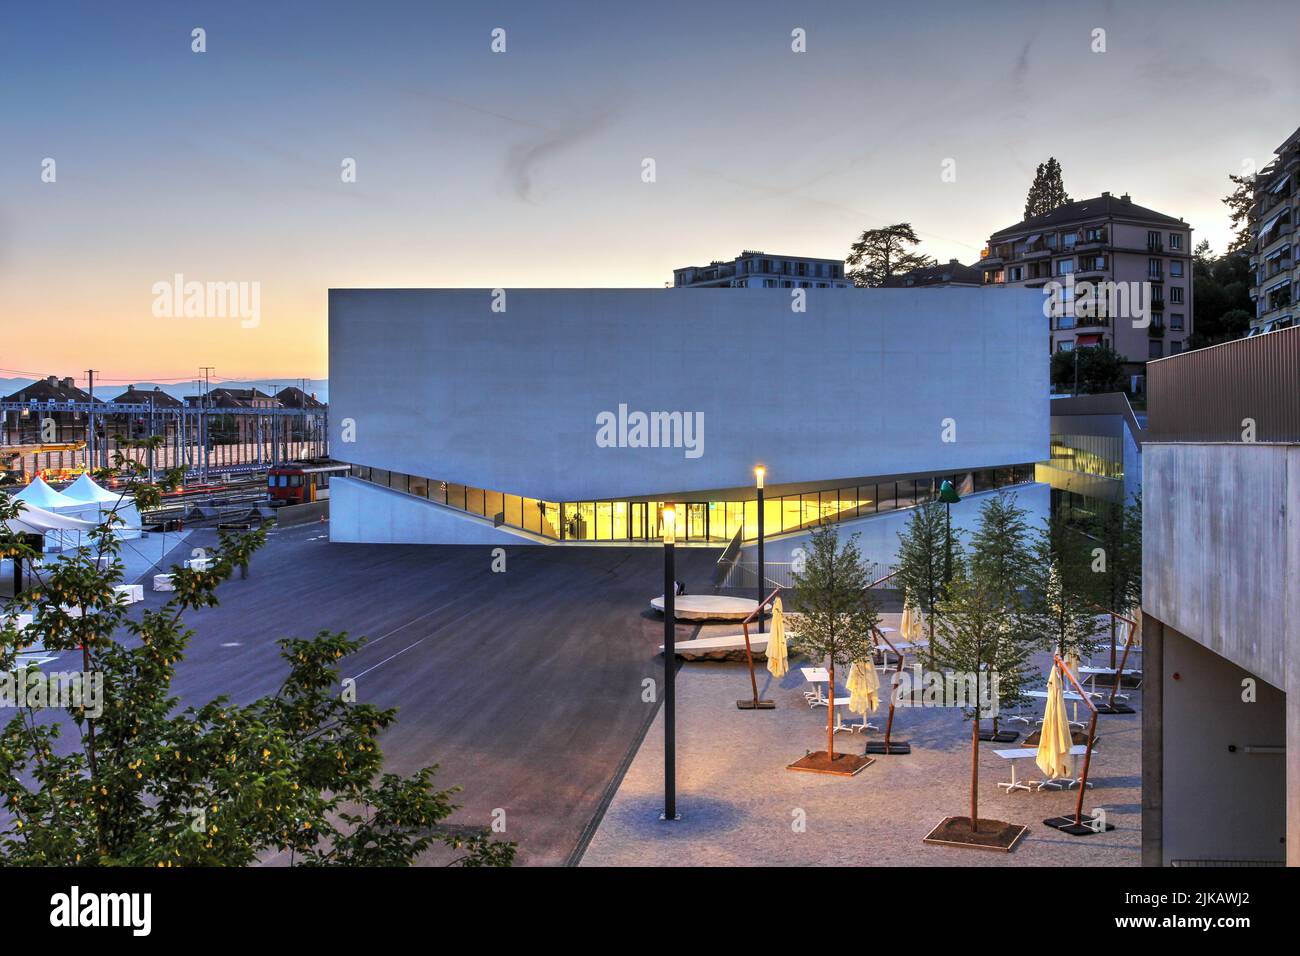 Il nuovo edificio di Platforme 10, Losanna, Svizzera ospita 2 musei: Mudac (Musée de design et d'Arts appliqués contemporains) e Musée de l'Ely Foto Stock